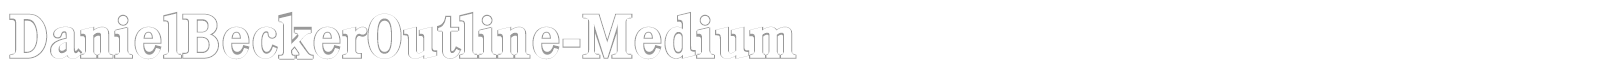 DanielBeckerOutline-Medium font preview